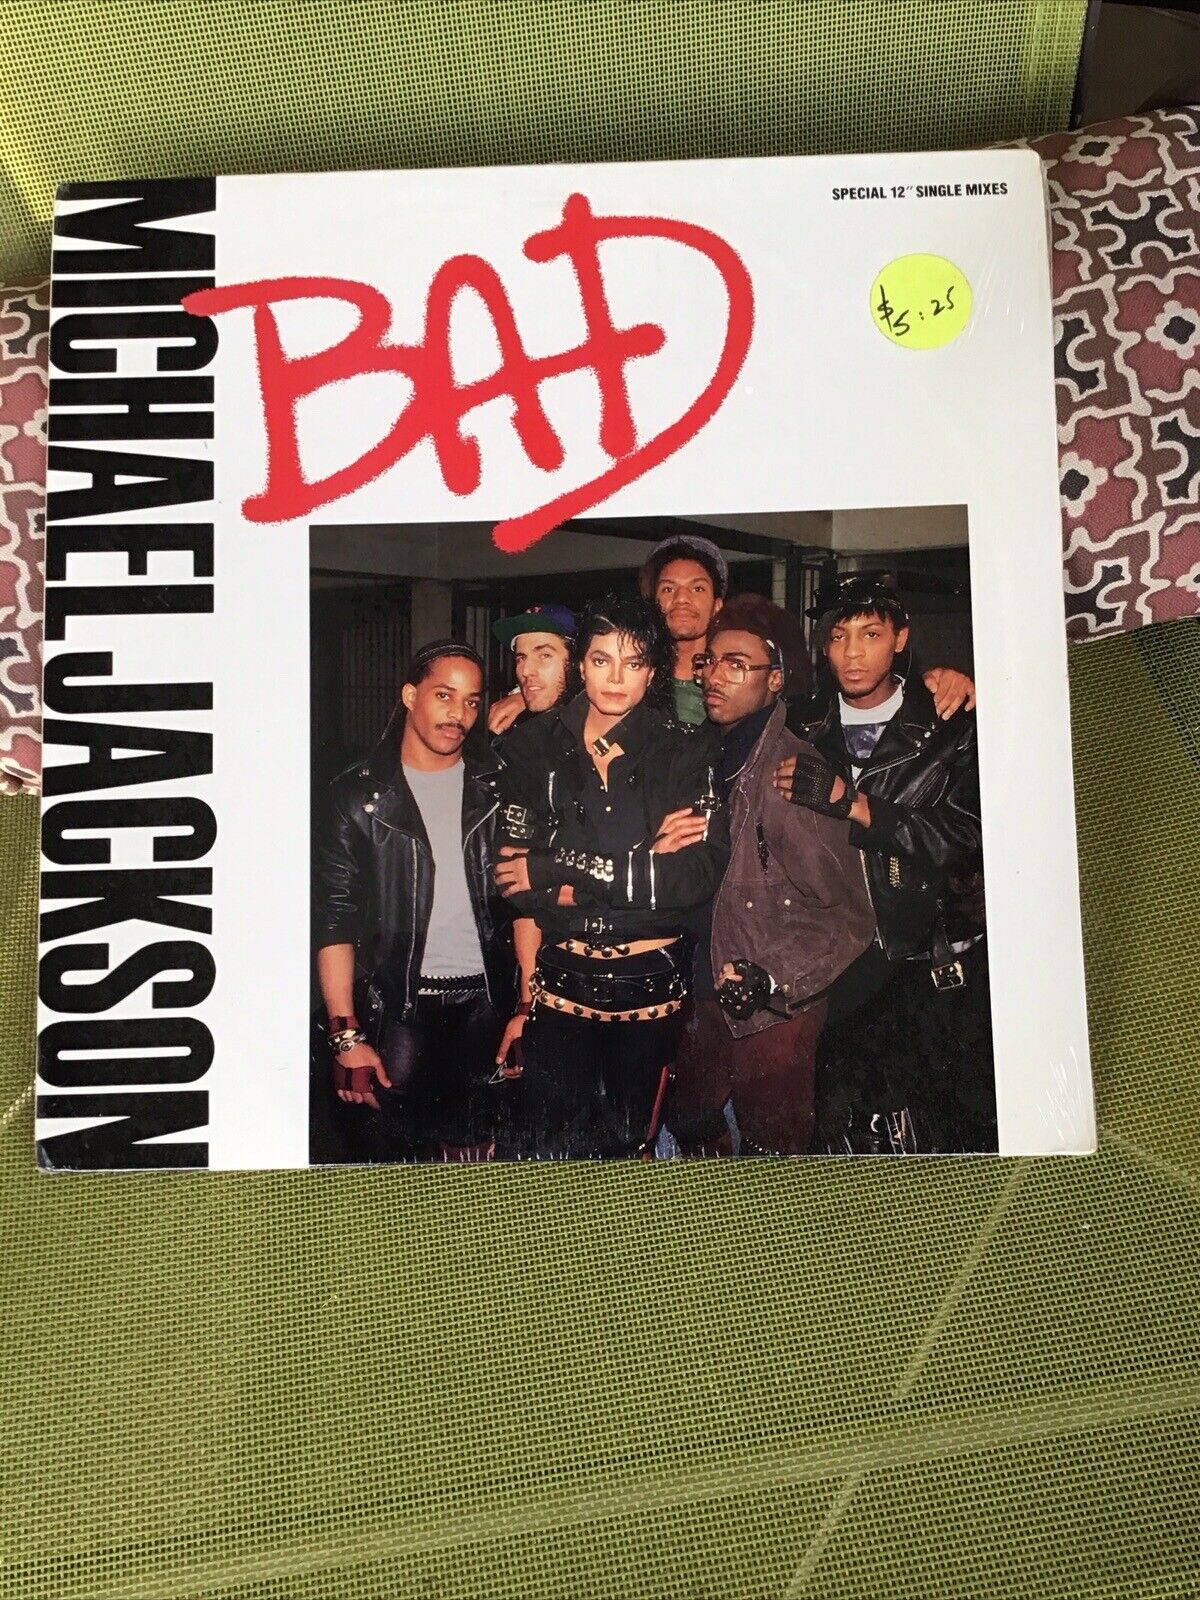 Michael Jackson -Bad 12” Vinyl  Single Mix 1987 EX, 33 NEW Pop Northern Soul R&B